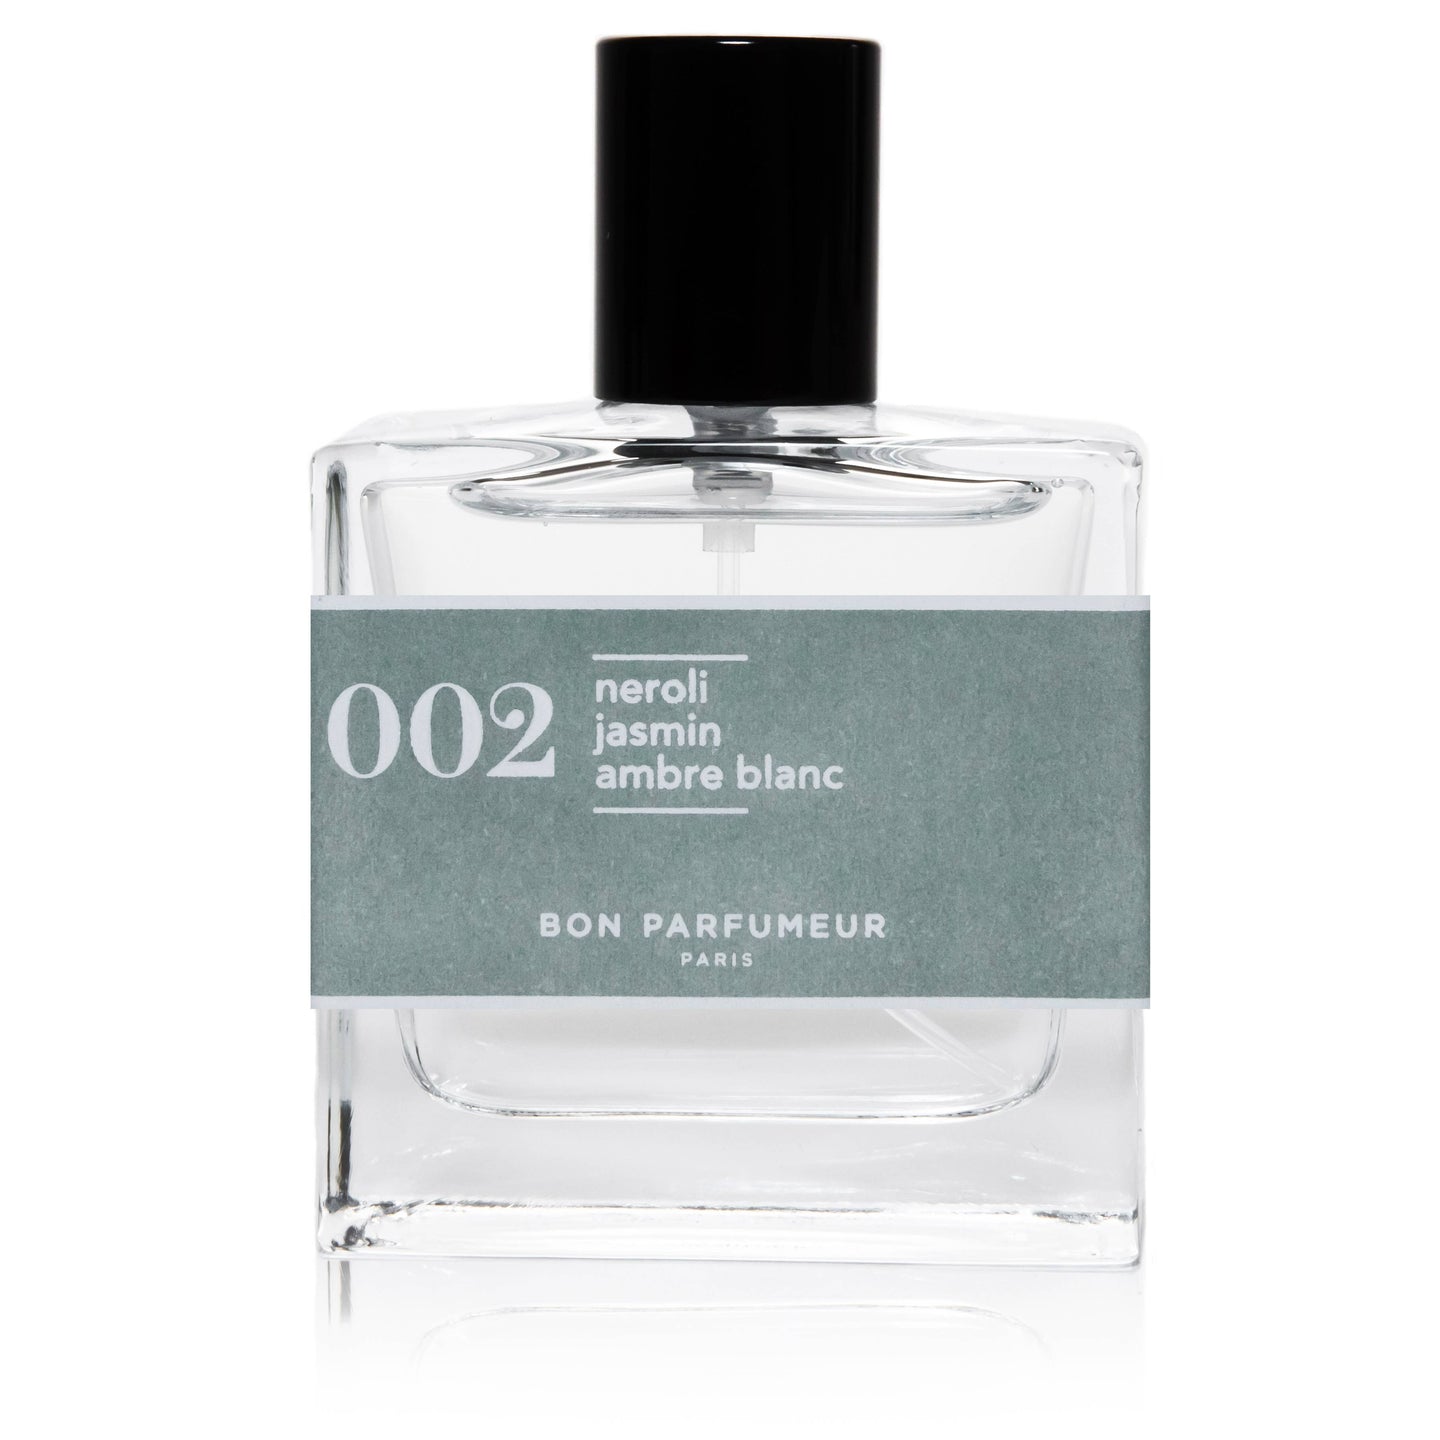 002 - neroli jasmine white amber